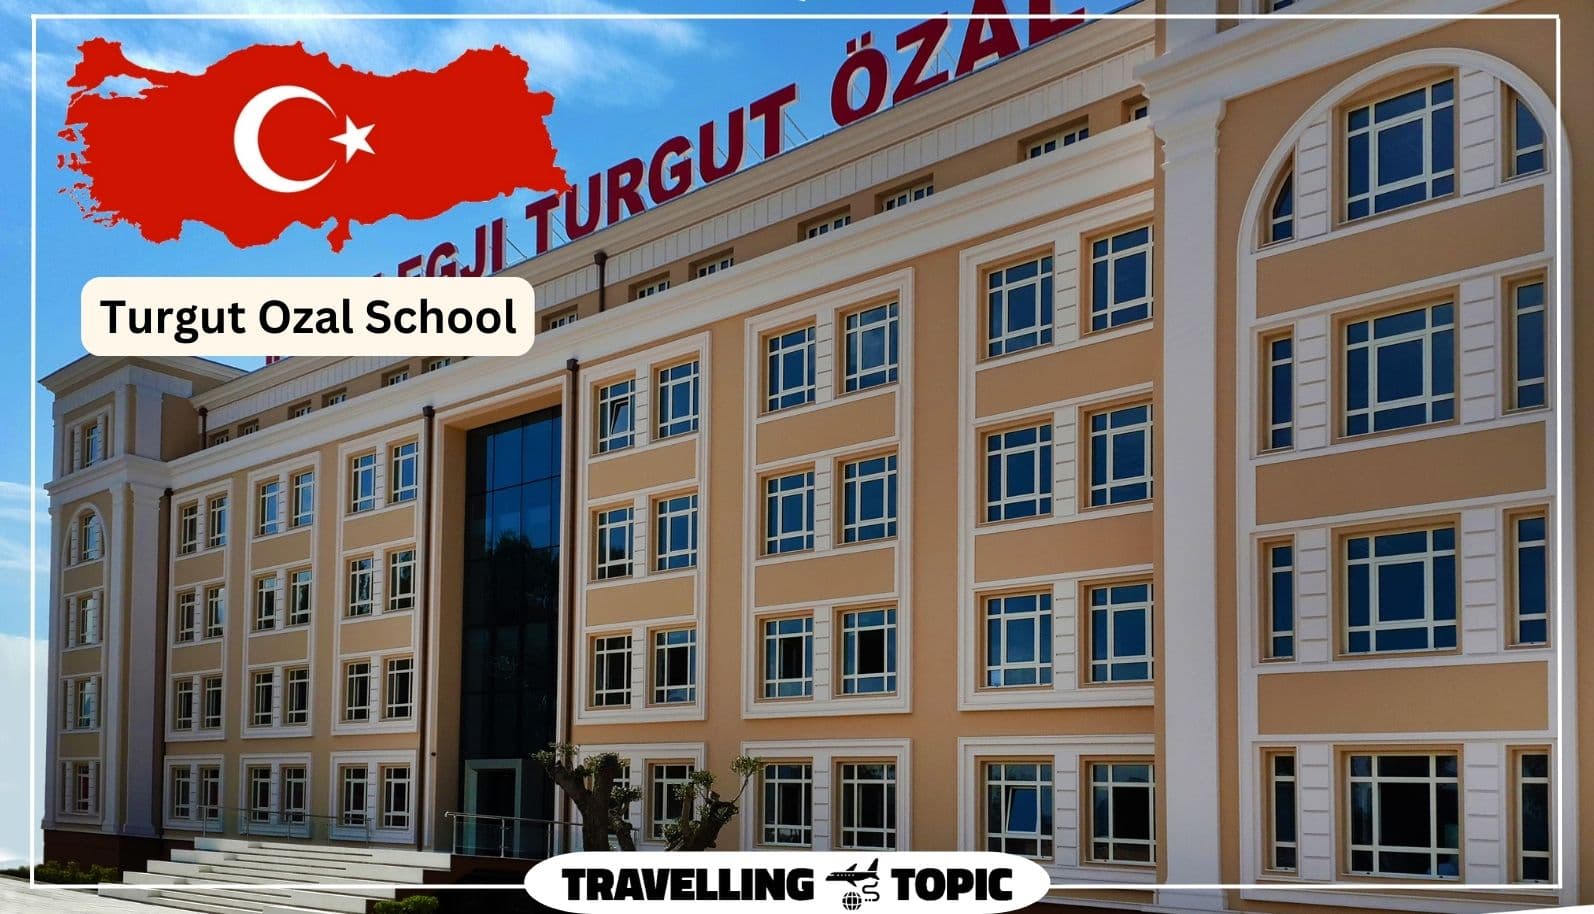 Turgut Ozal School